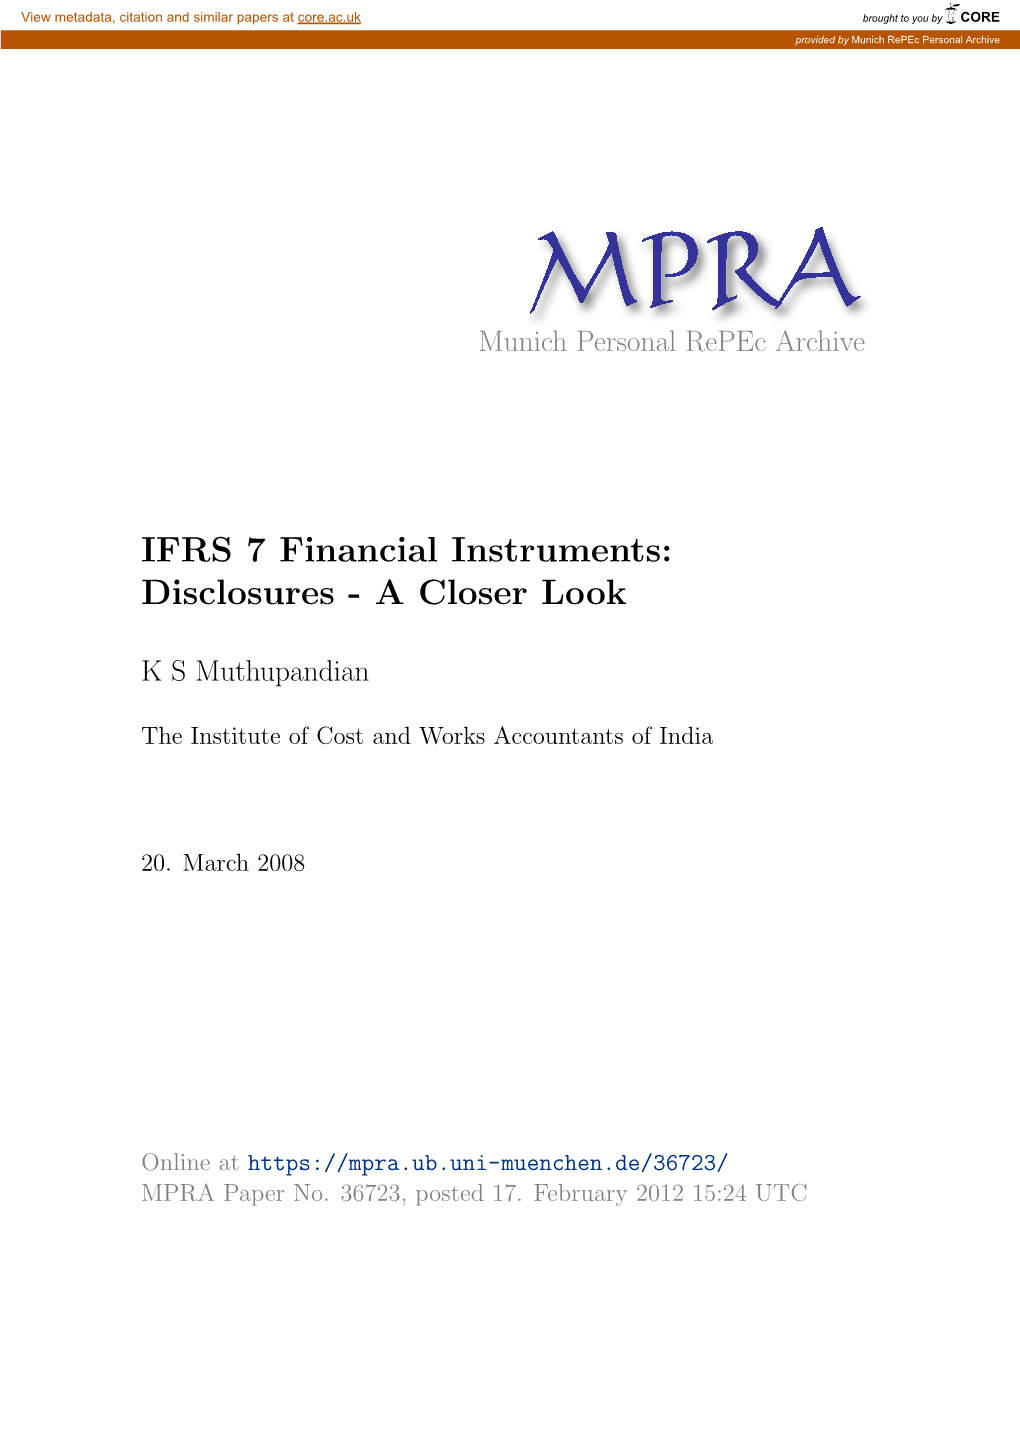 IFRS 7 Financial Instruments: Disclosures - a Closer Look